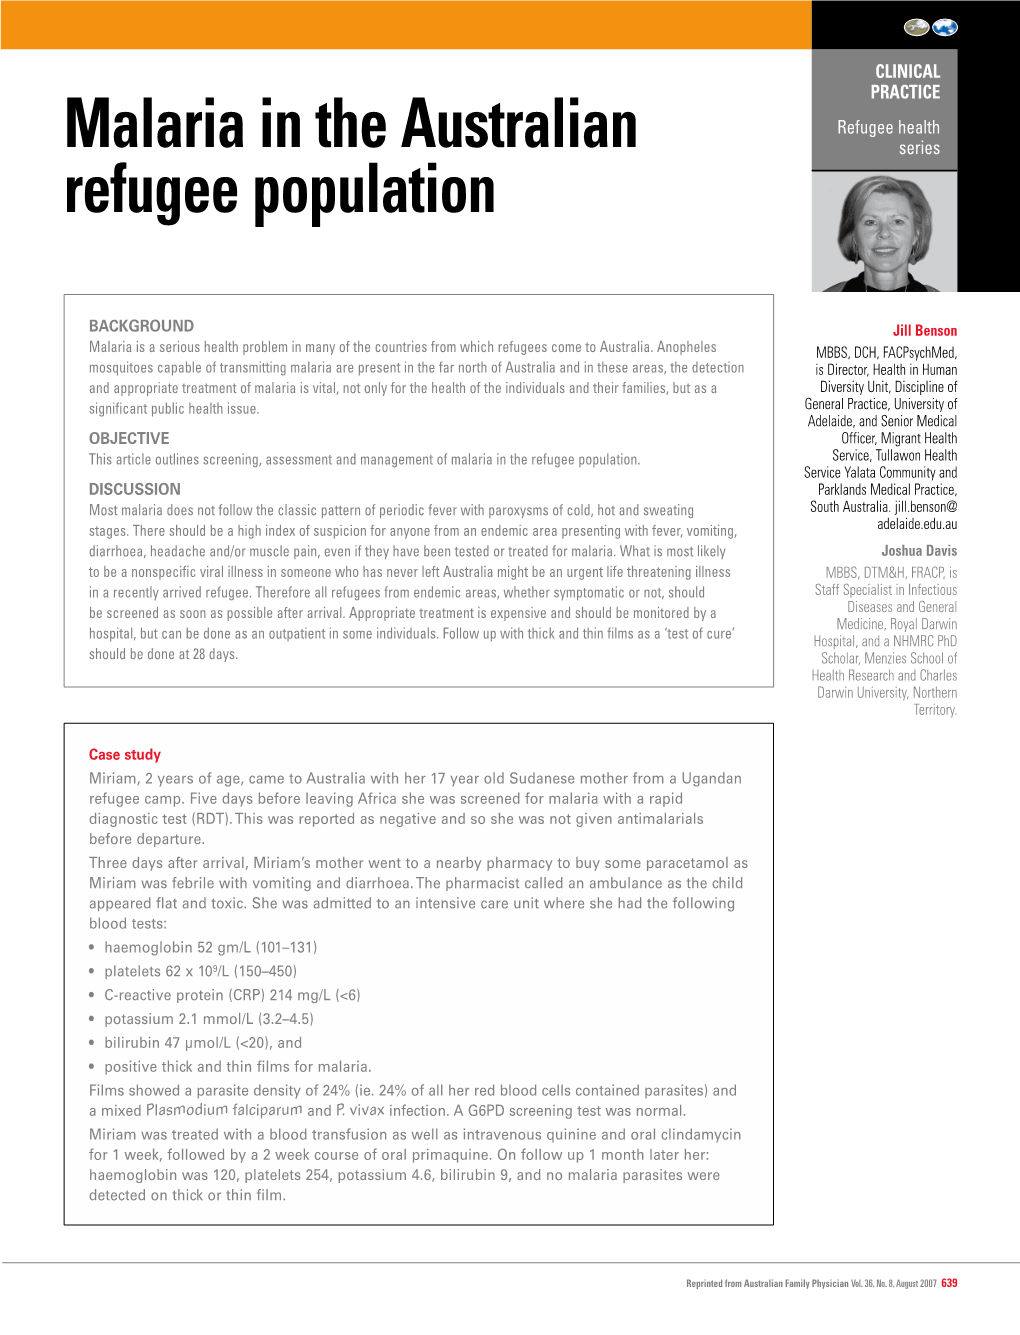 Malaria in the Australian Refugee Population